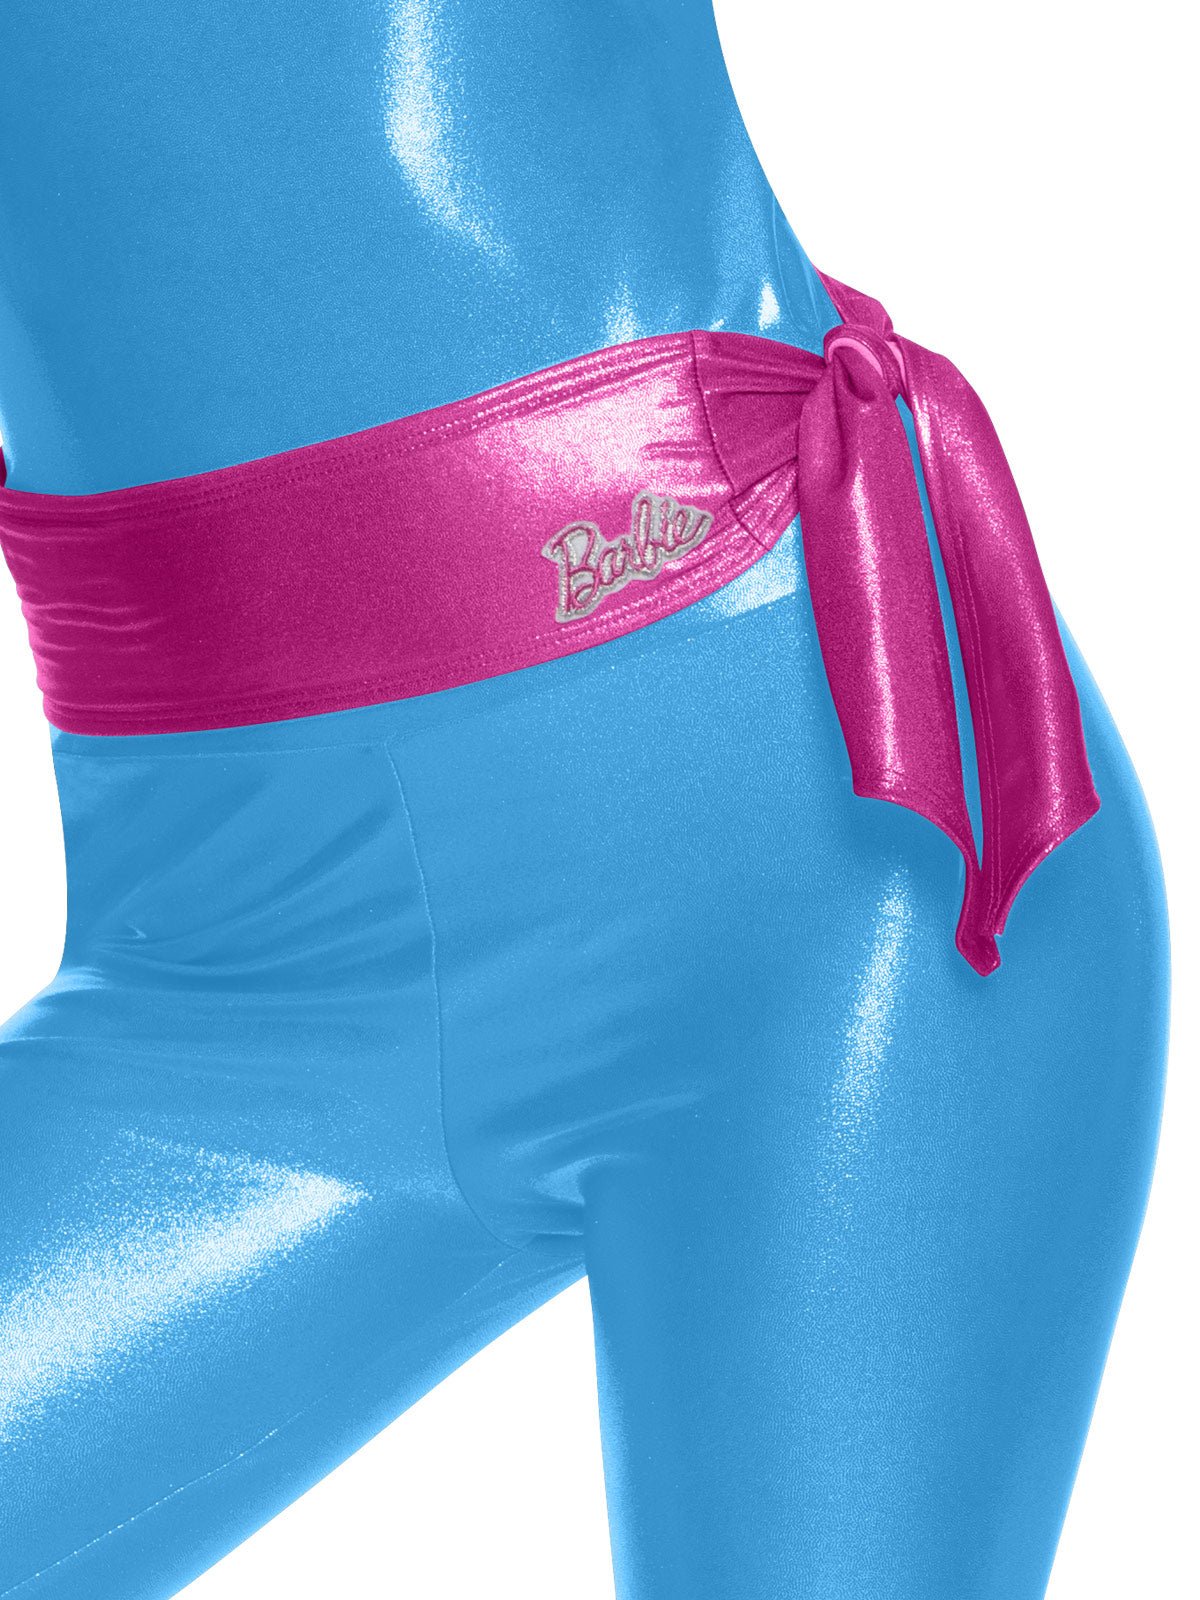 Barbie Exercise Costume - Sparkly Pink Belt